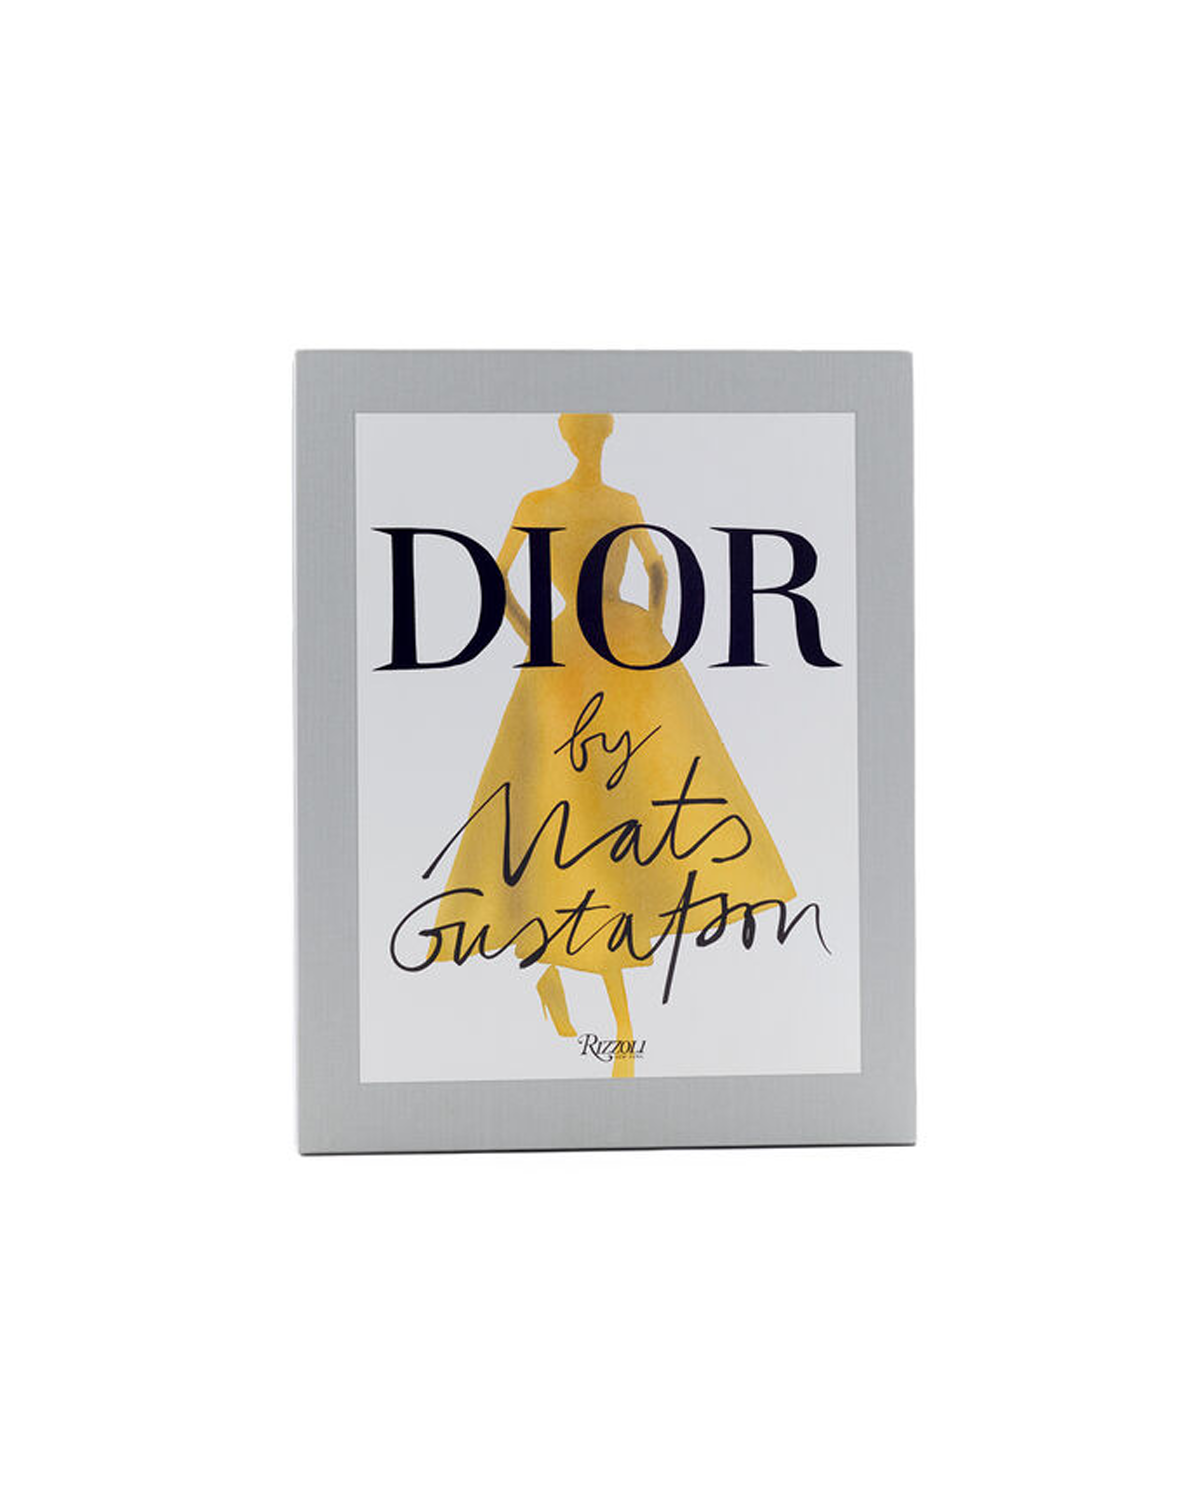 Dior by Mats Gustafson